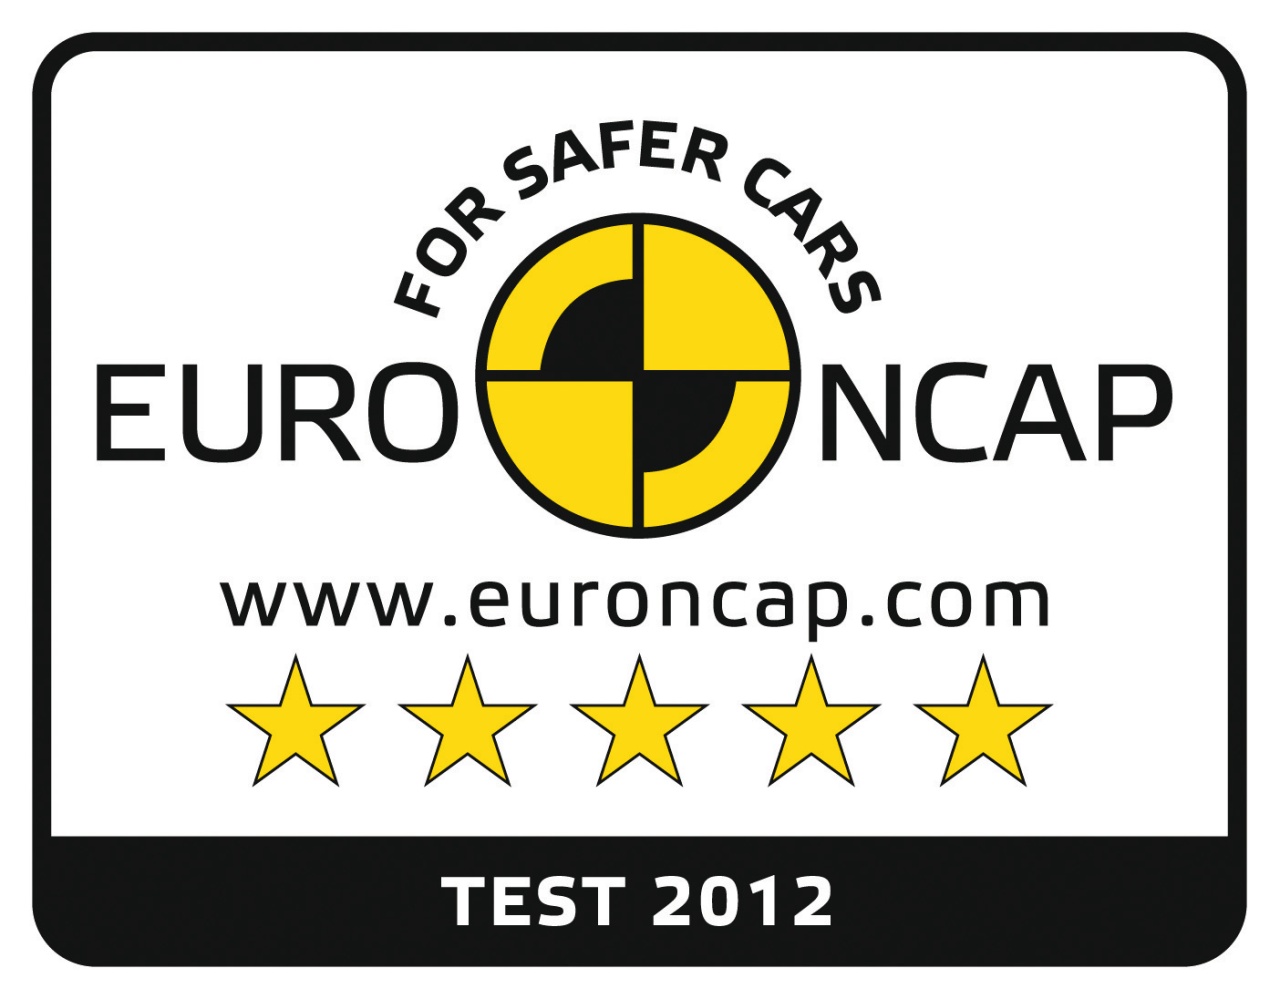 Euro Ncap logo, test 2012 5 stars